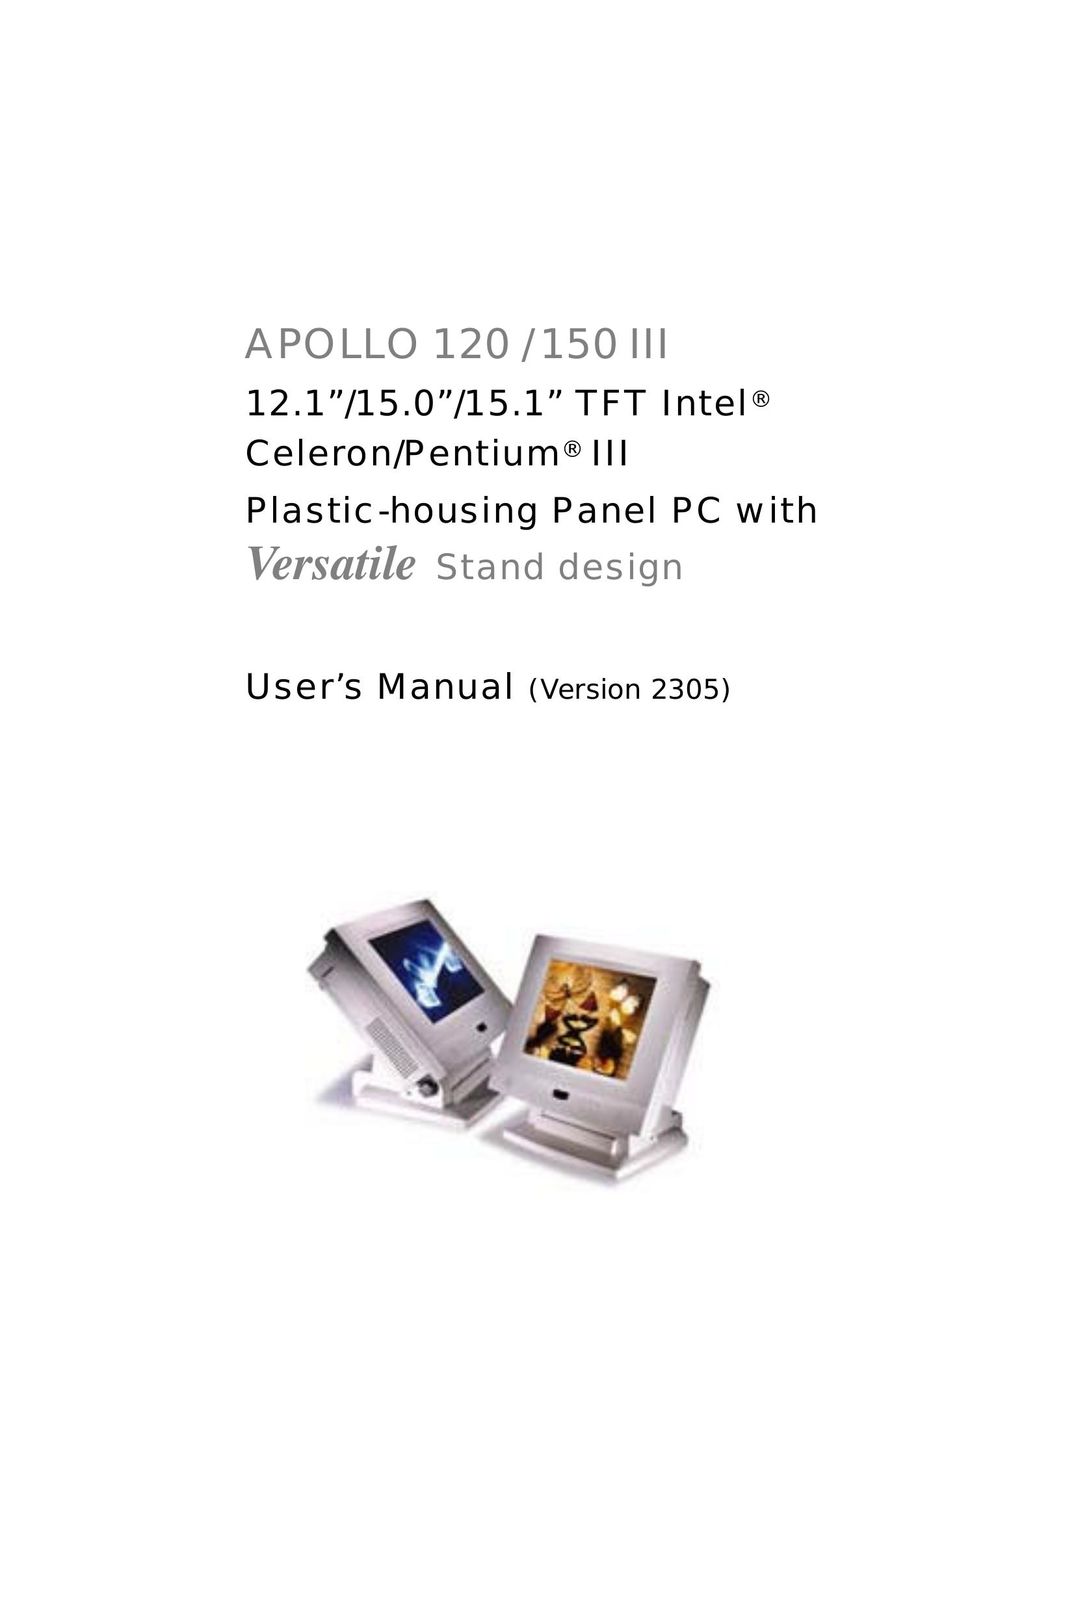 Apollo 150 III Personal Computer User Manual